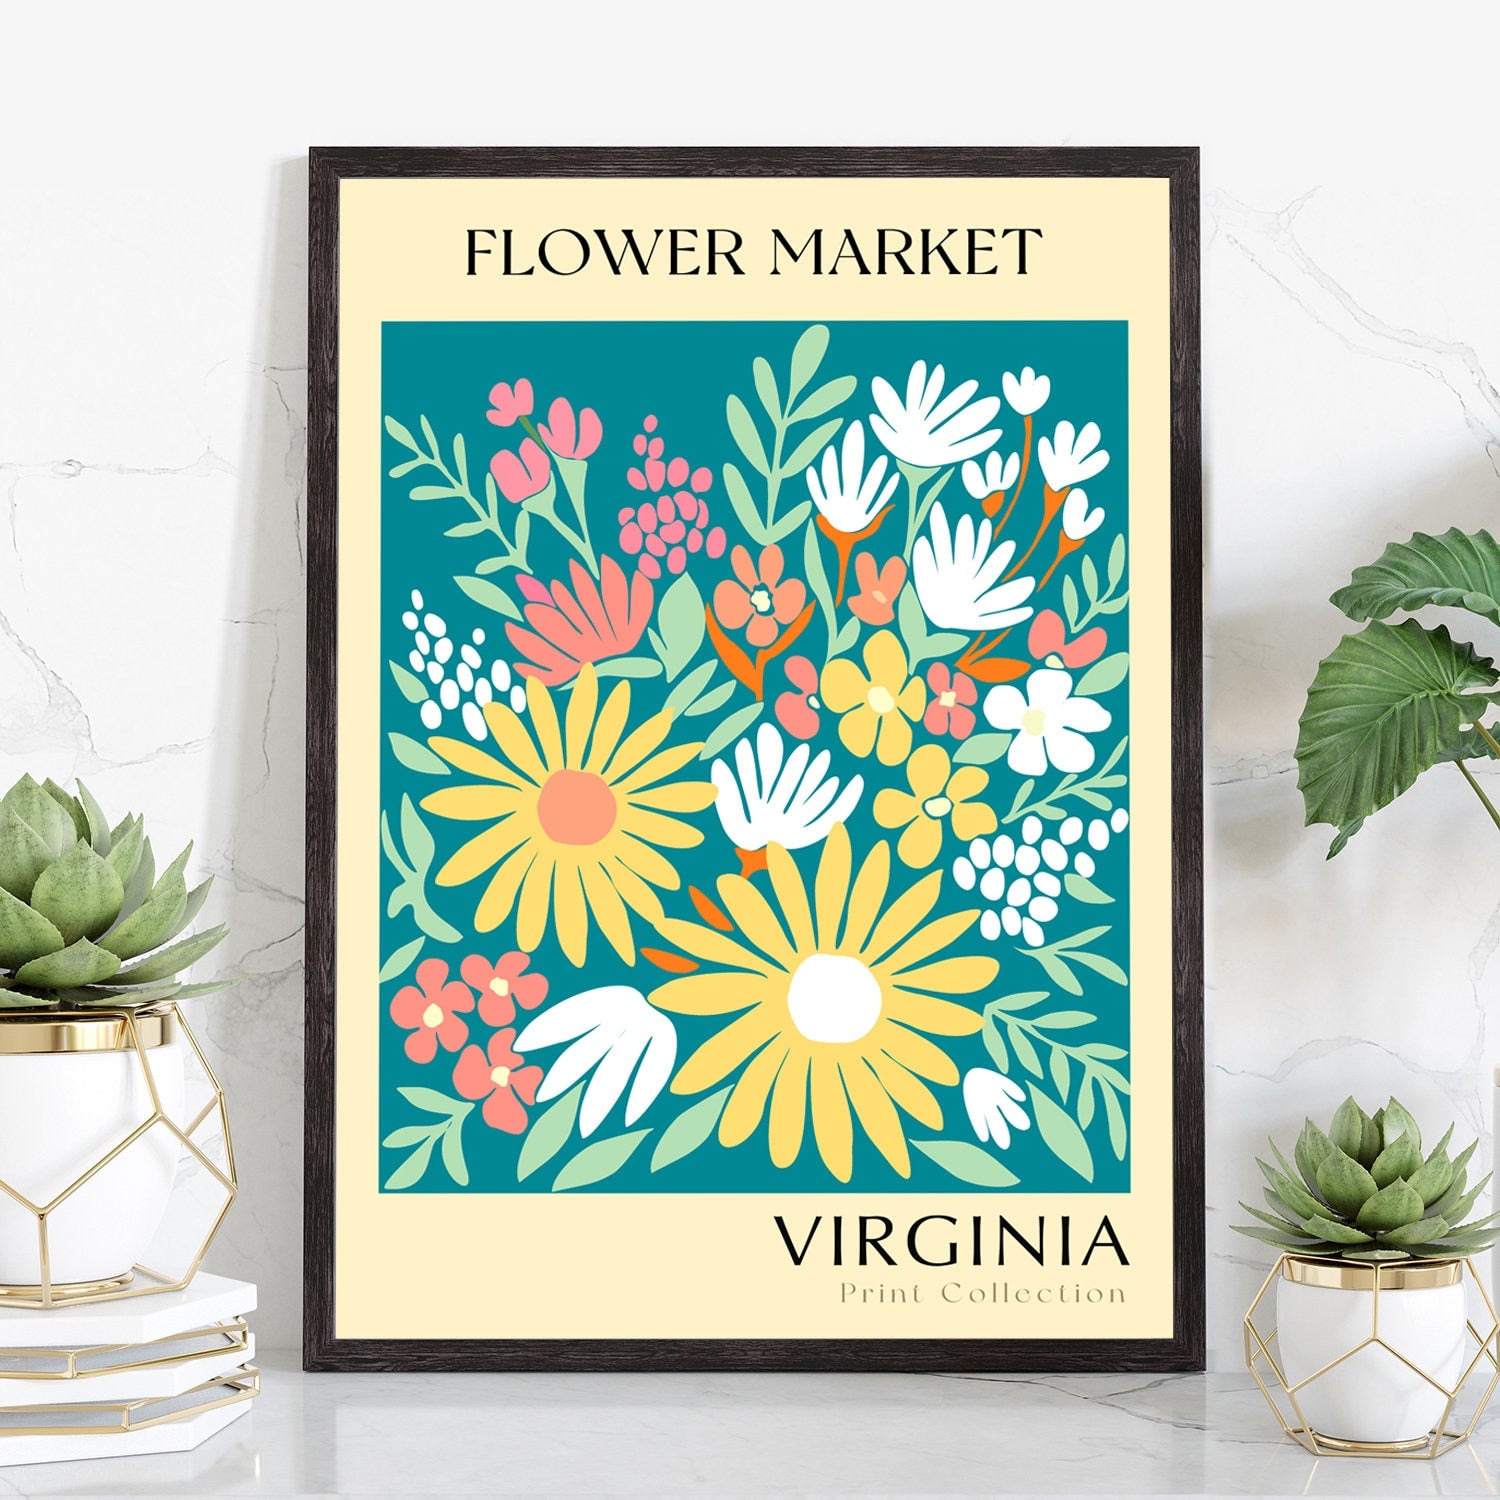 Virginia State flower print, USA states poster, Virginia flower market poster, Botanical poster, Nature poster artwork, Boho floral wall art